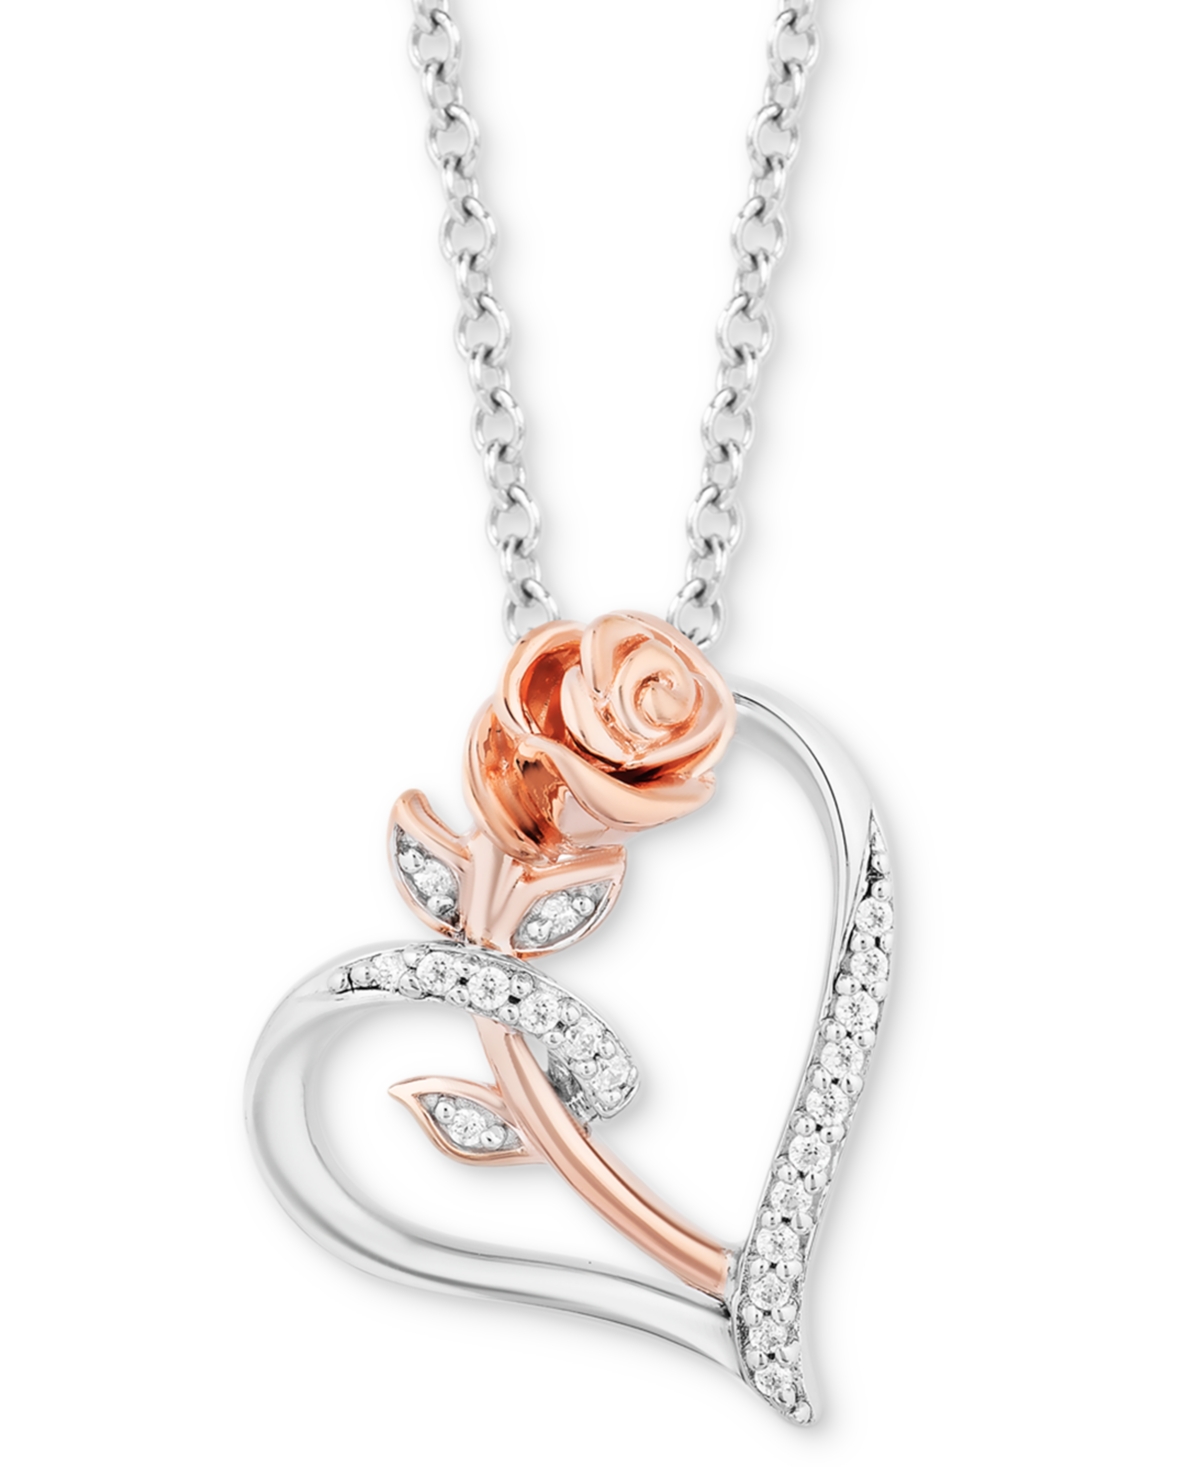 Enchanted Disney Fine Jewelry Diamond Belle Rose Heart Pendant Necklace (1/10 ct. t.w.) in Sterling Silver & 14k Rose Gold, 16" + 2" extender